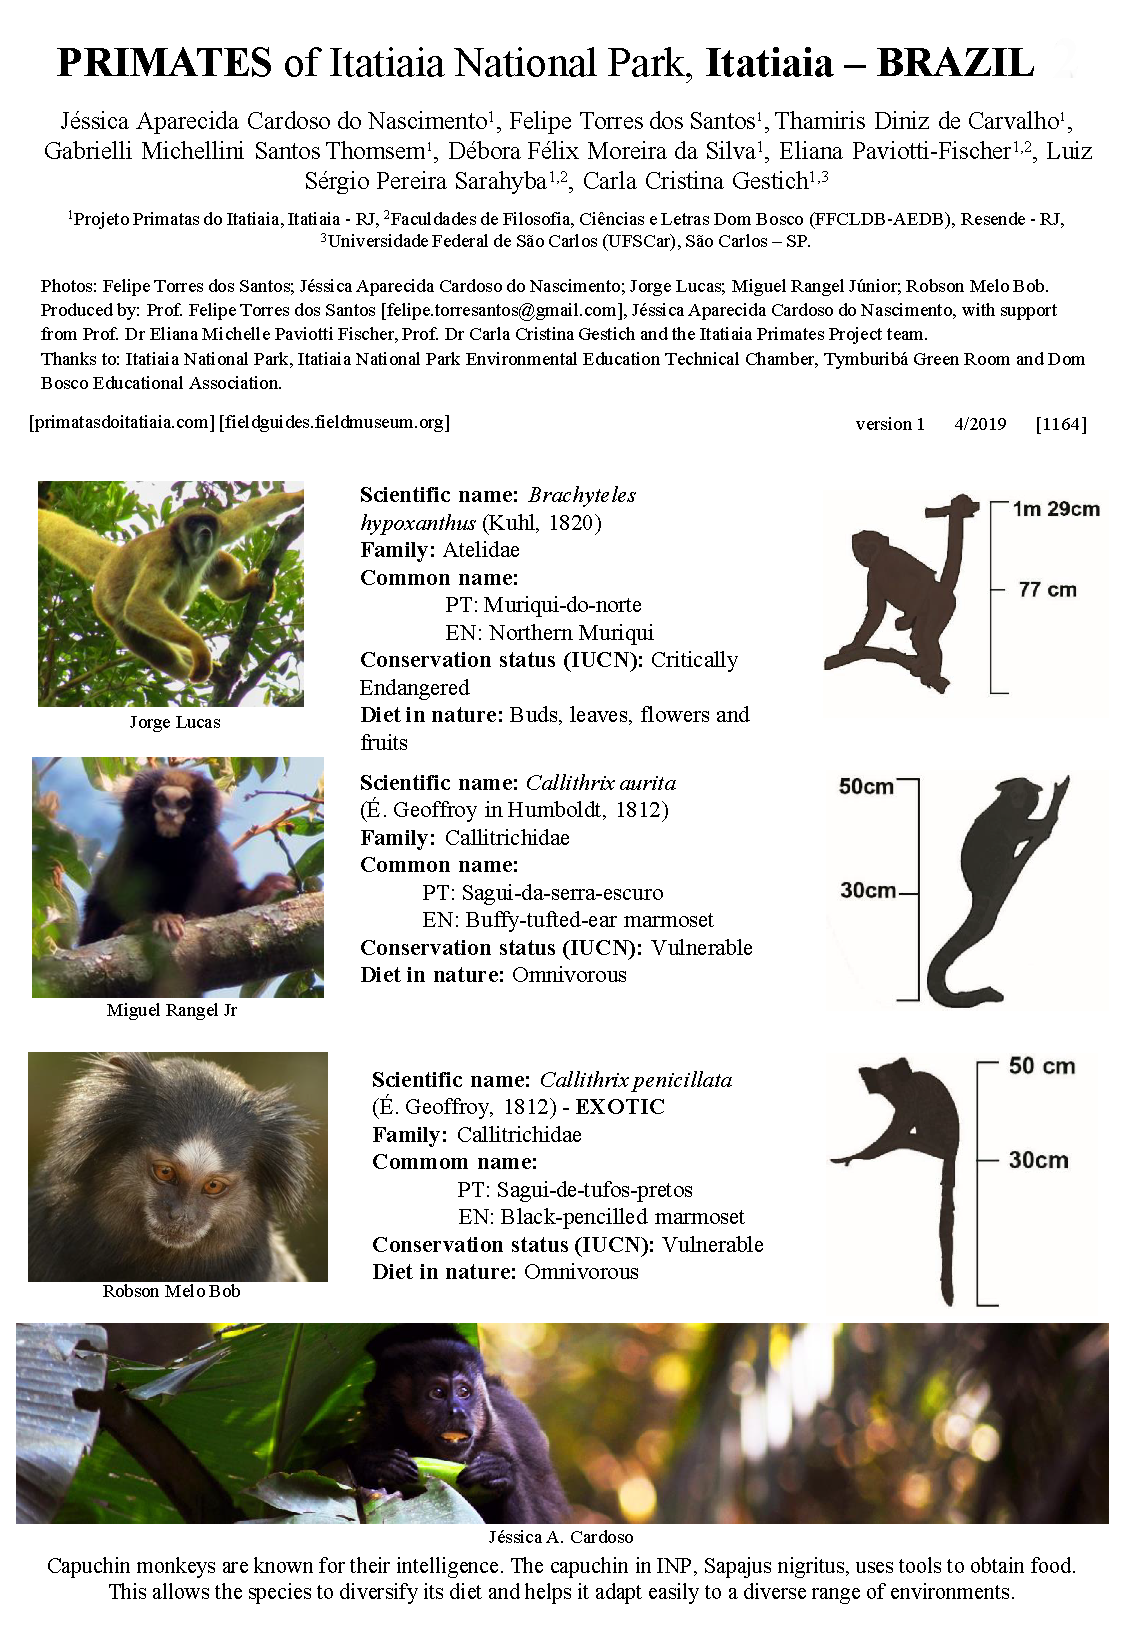 1164_brazil_primates_of_itatiaia_national_park.pdf